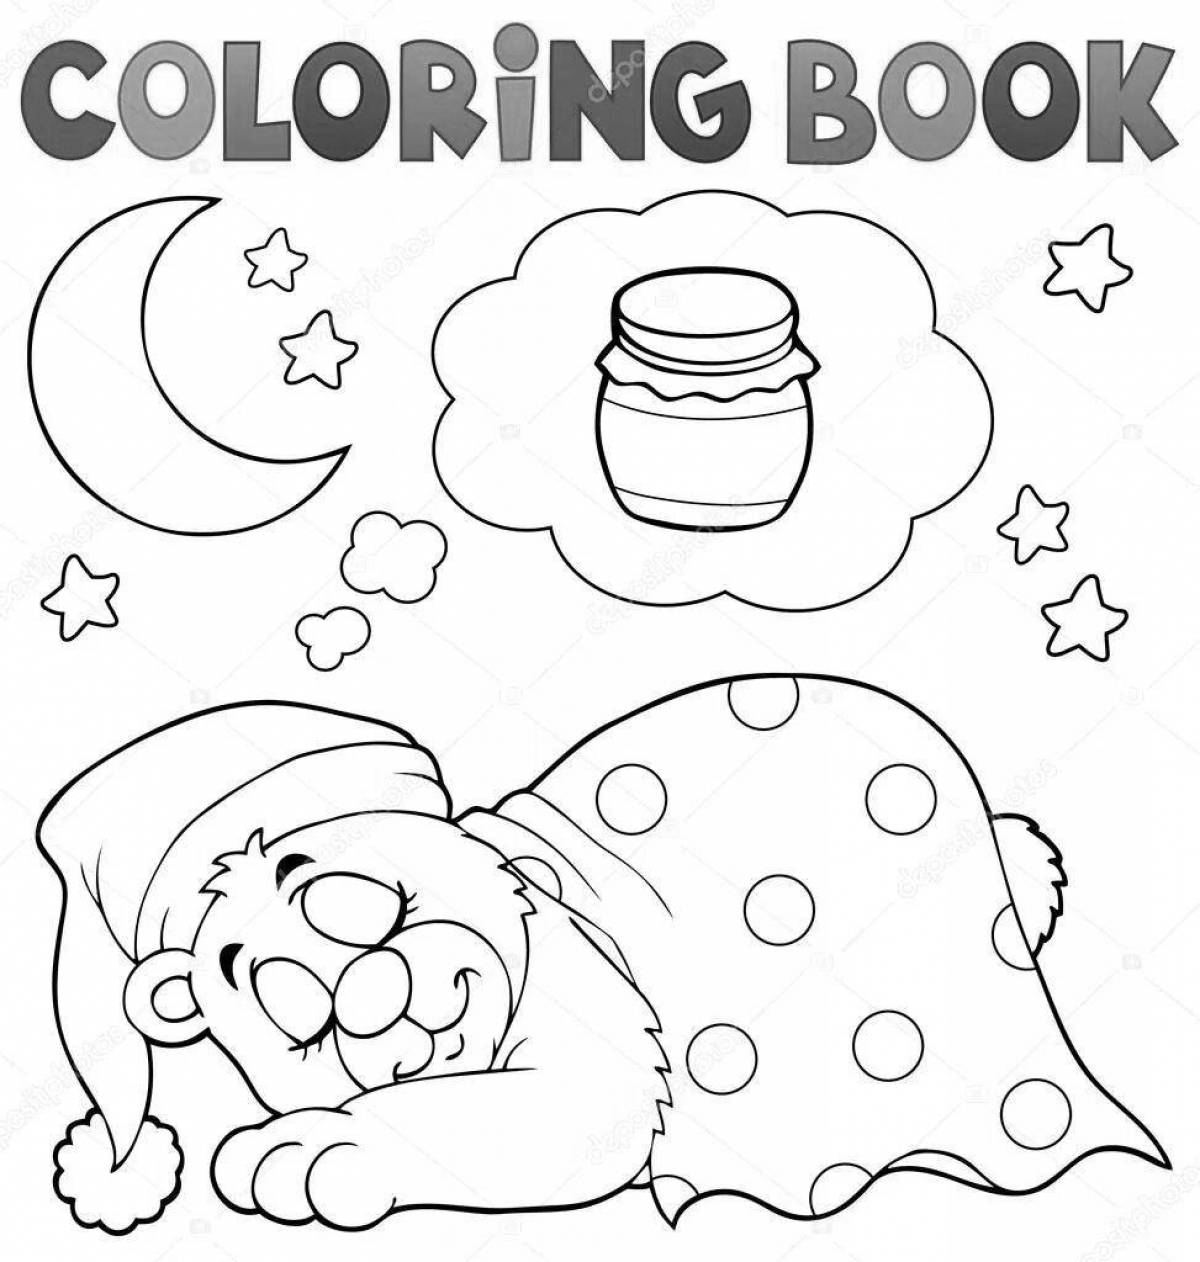 Silent coloring of a sleeping bear in a den